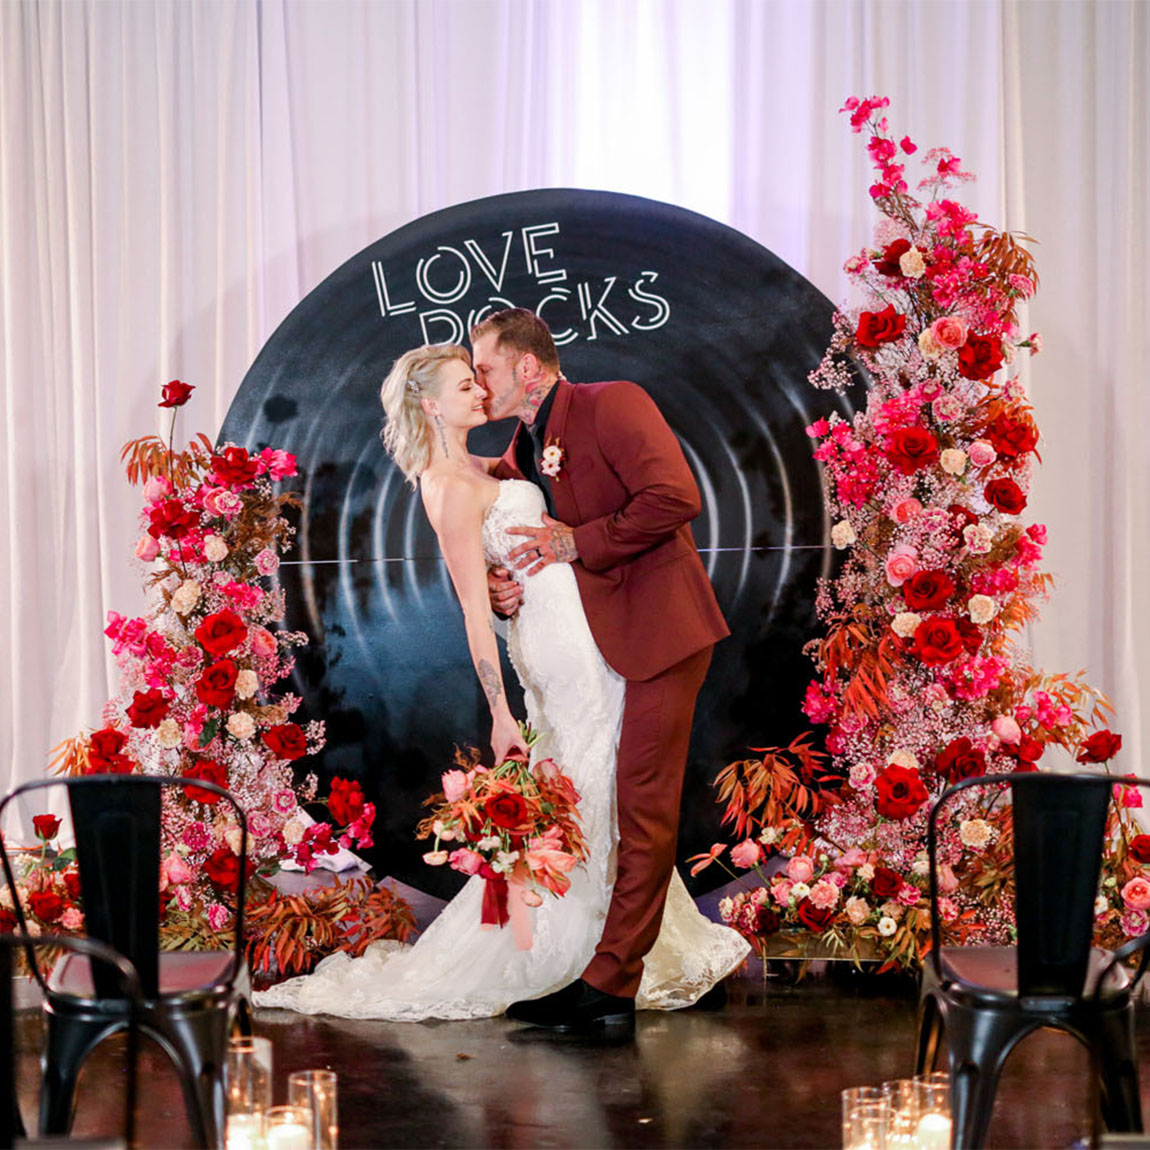 Love Rocks: Totally Non-Cheesy Valentine's Day Wedding Inspiration